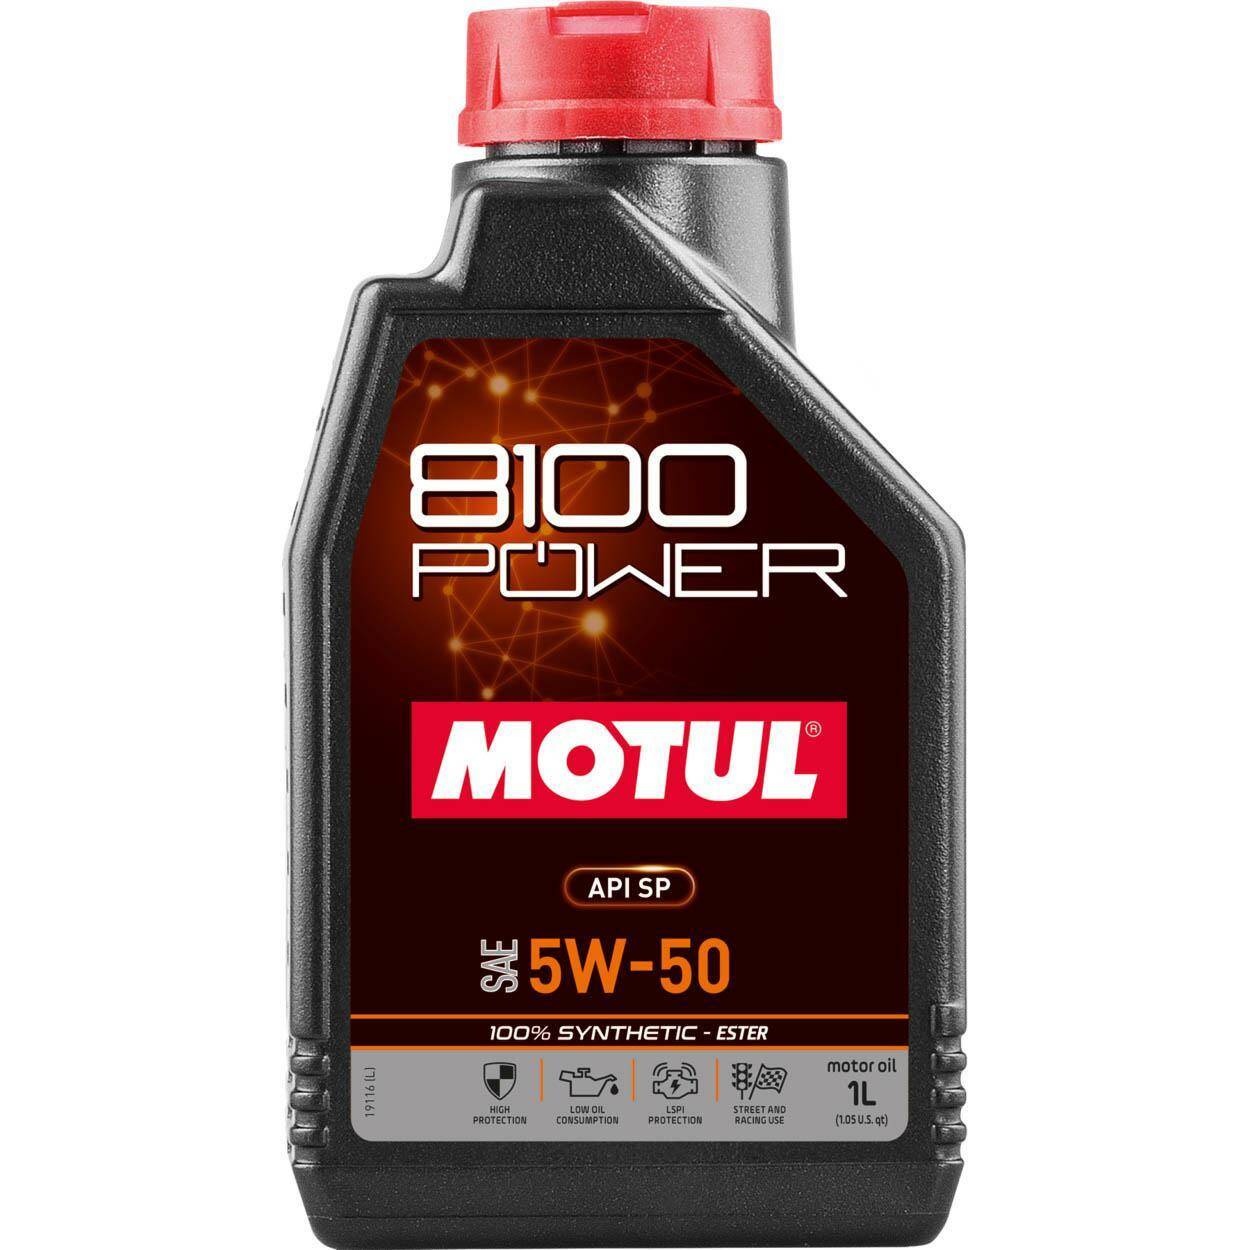 Motul 8100 Power 5w50 1L API SP FORD